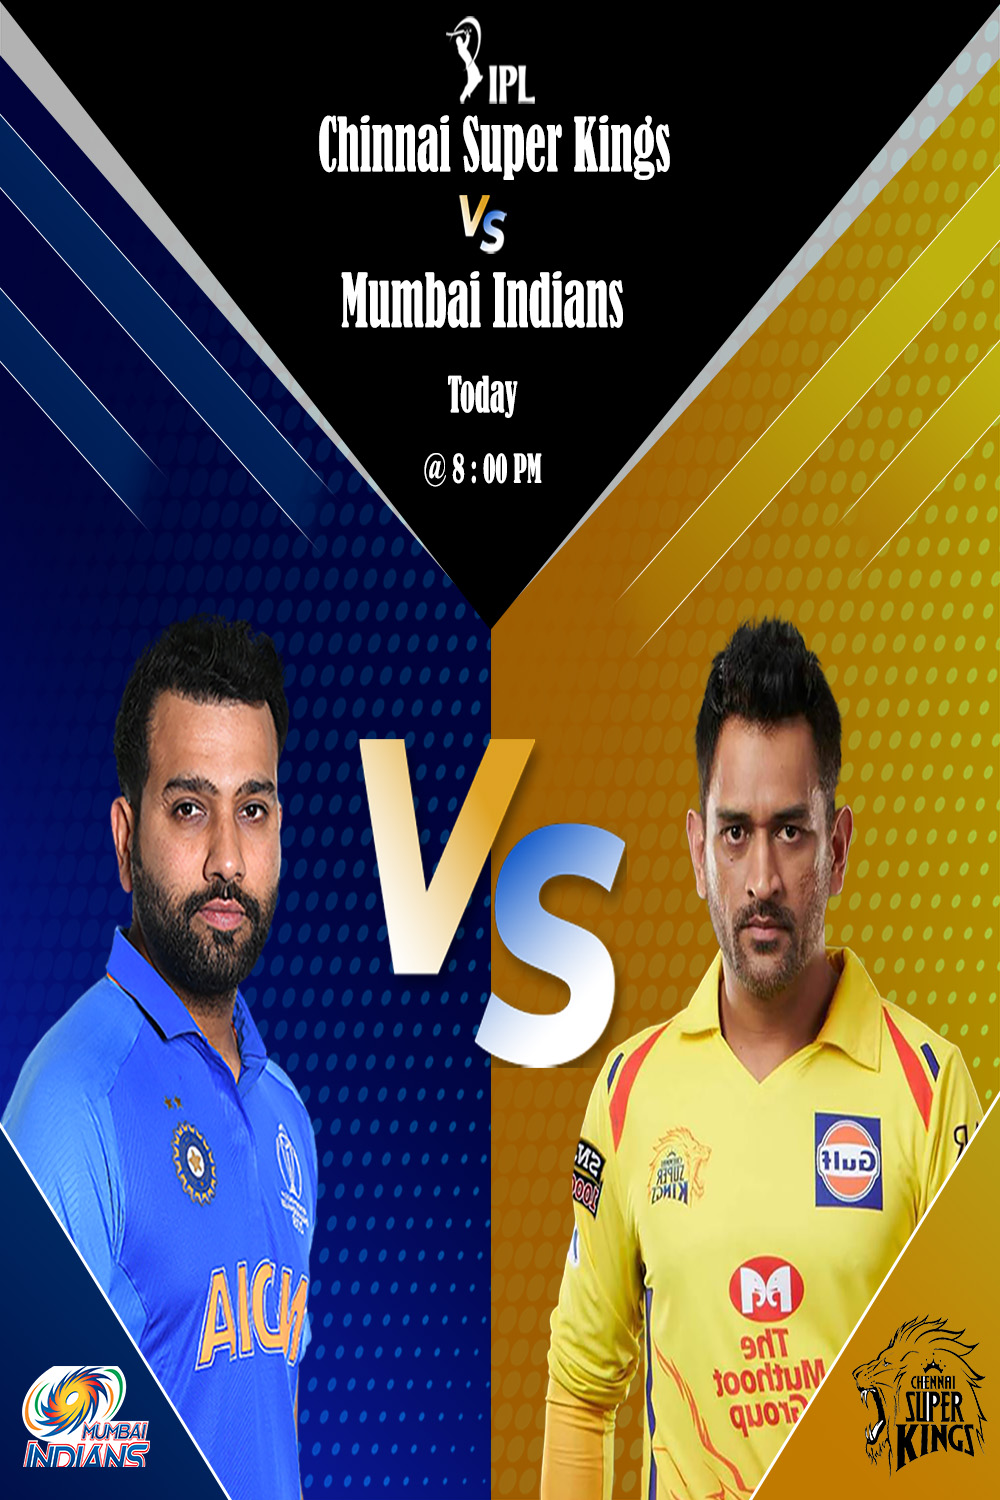 Cricket Chennai super kings vs mumbai indians social media poster design pinterest preview image.